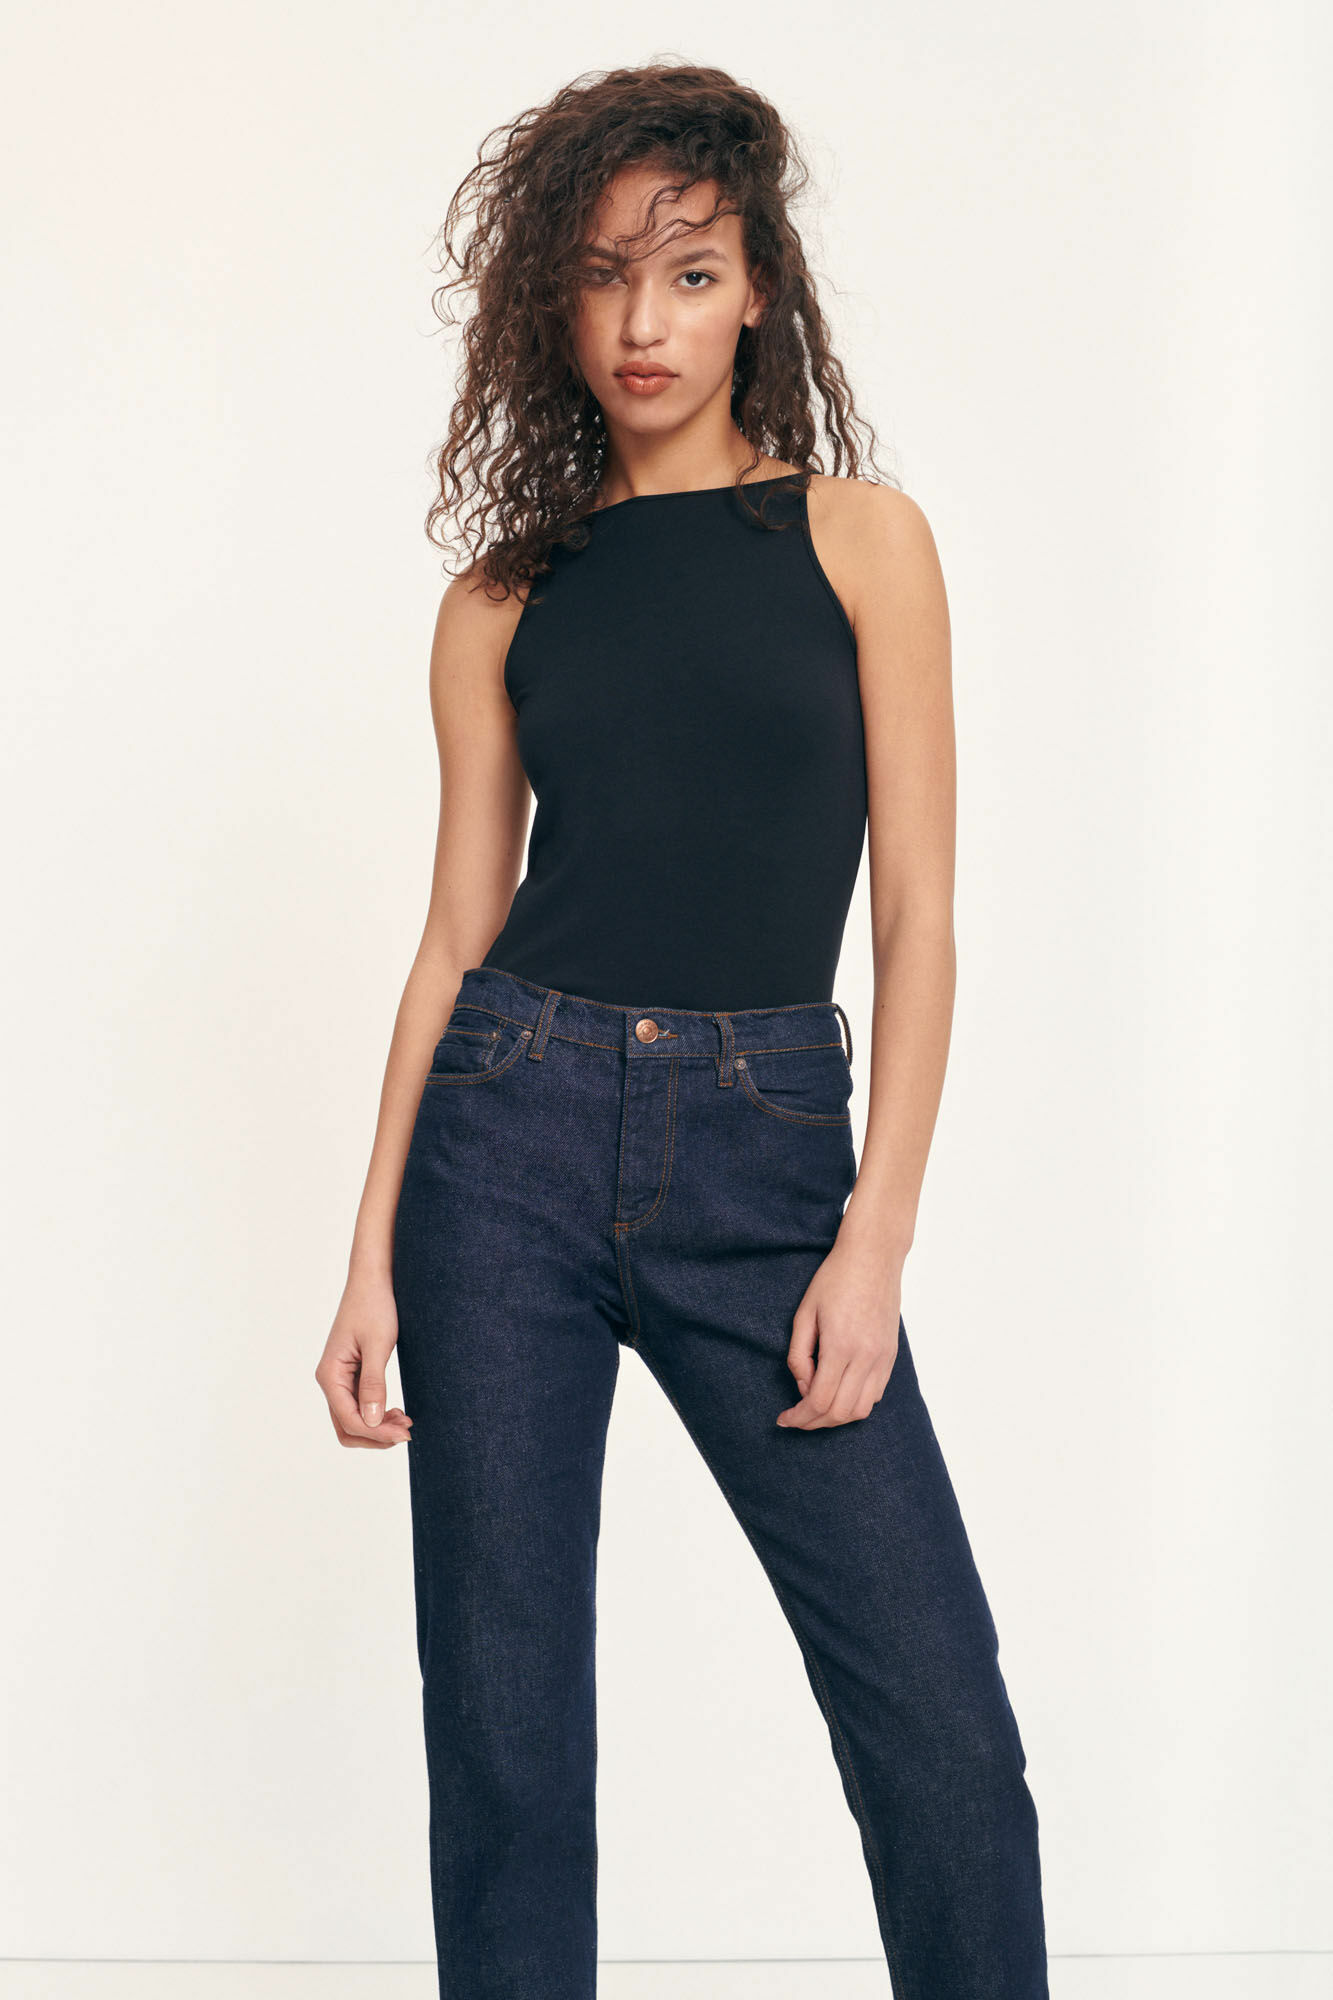 Prelude Pickering Skalk Samsoe Samsoe dames hemd Stinna top zwart online kopen bij No Sense. STINNA  265-BLACK | Where jeans meet fashion